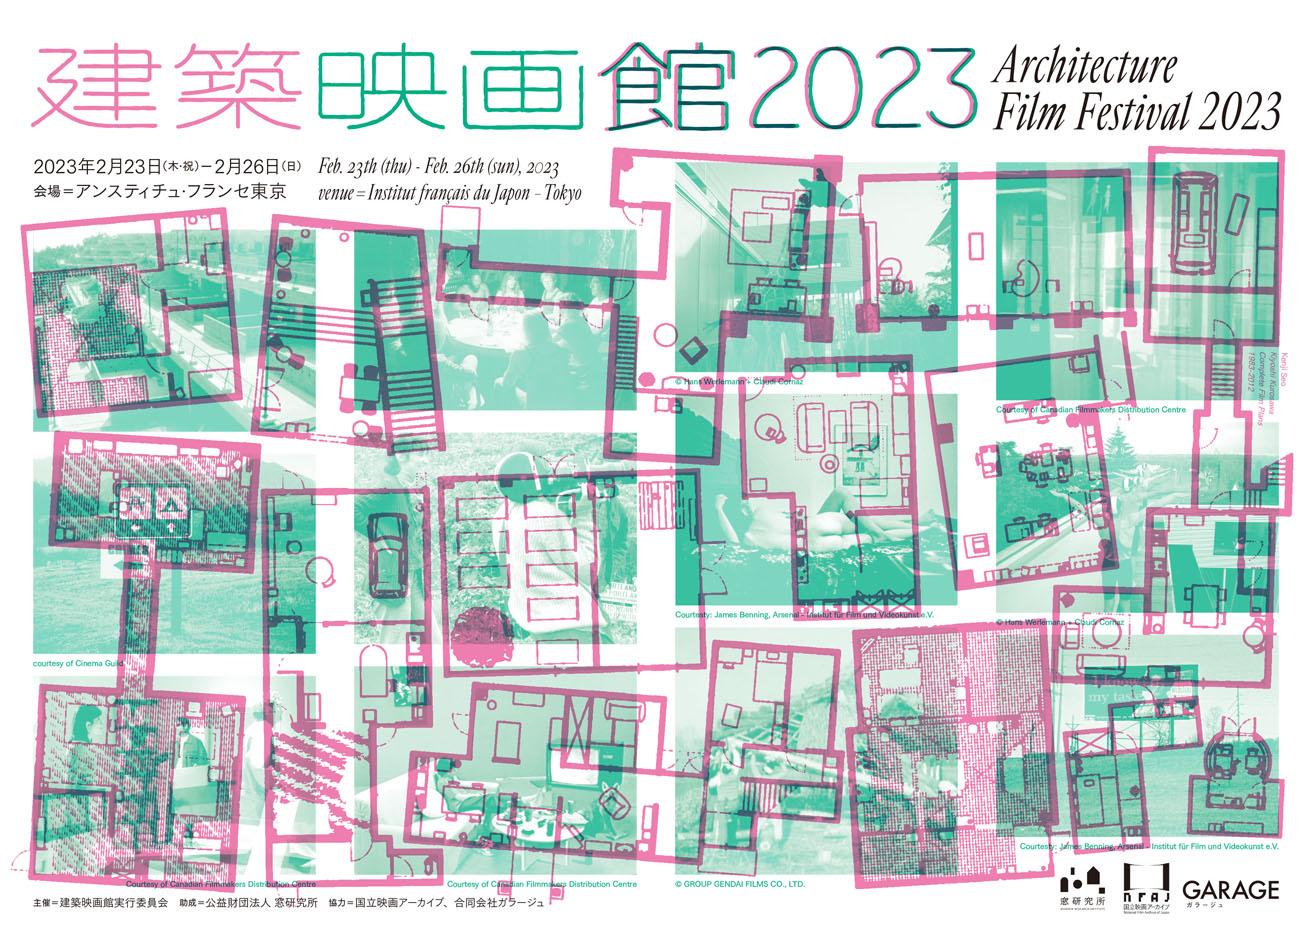 坂倉準三・藤本壮介の名建築で『建築映画館2023』を開催。